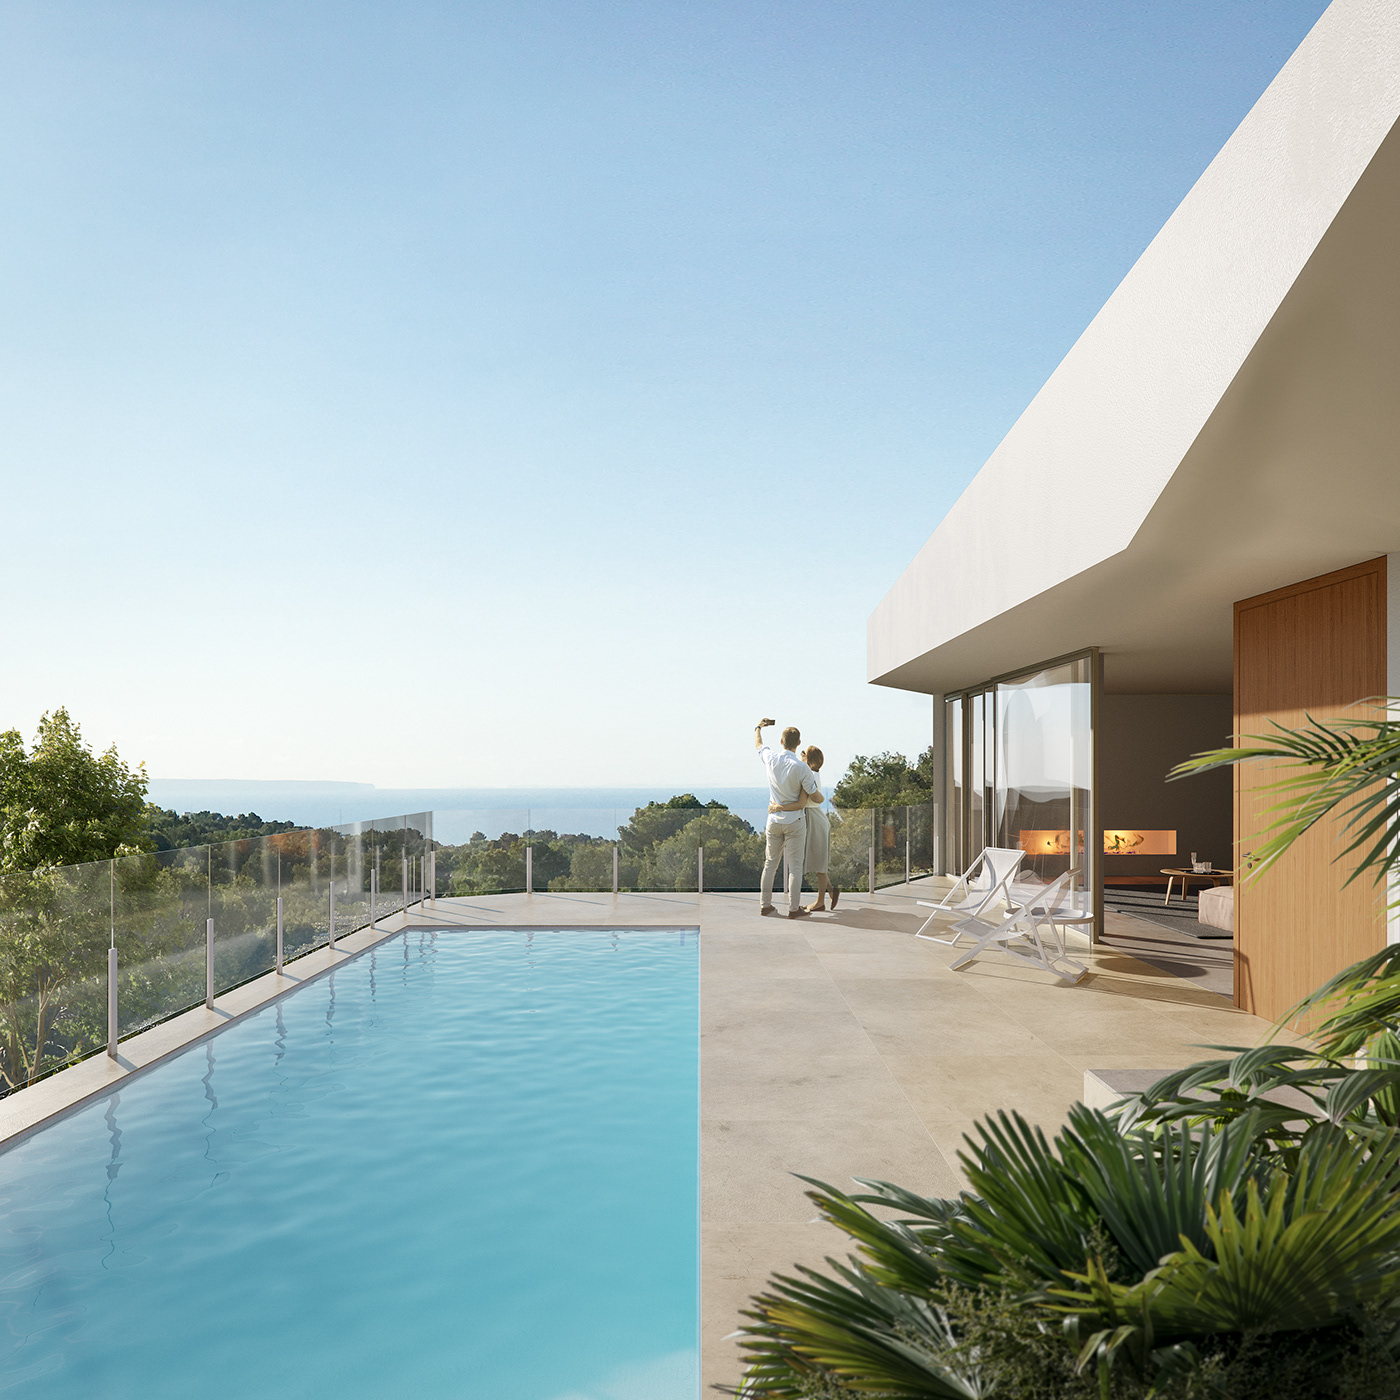 Vila mallorca housing Render achitecture interior design 